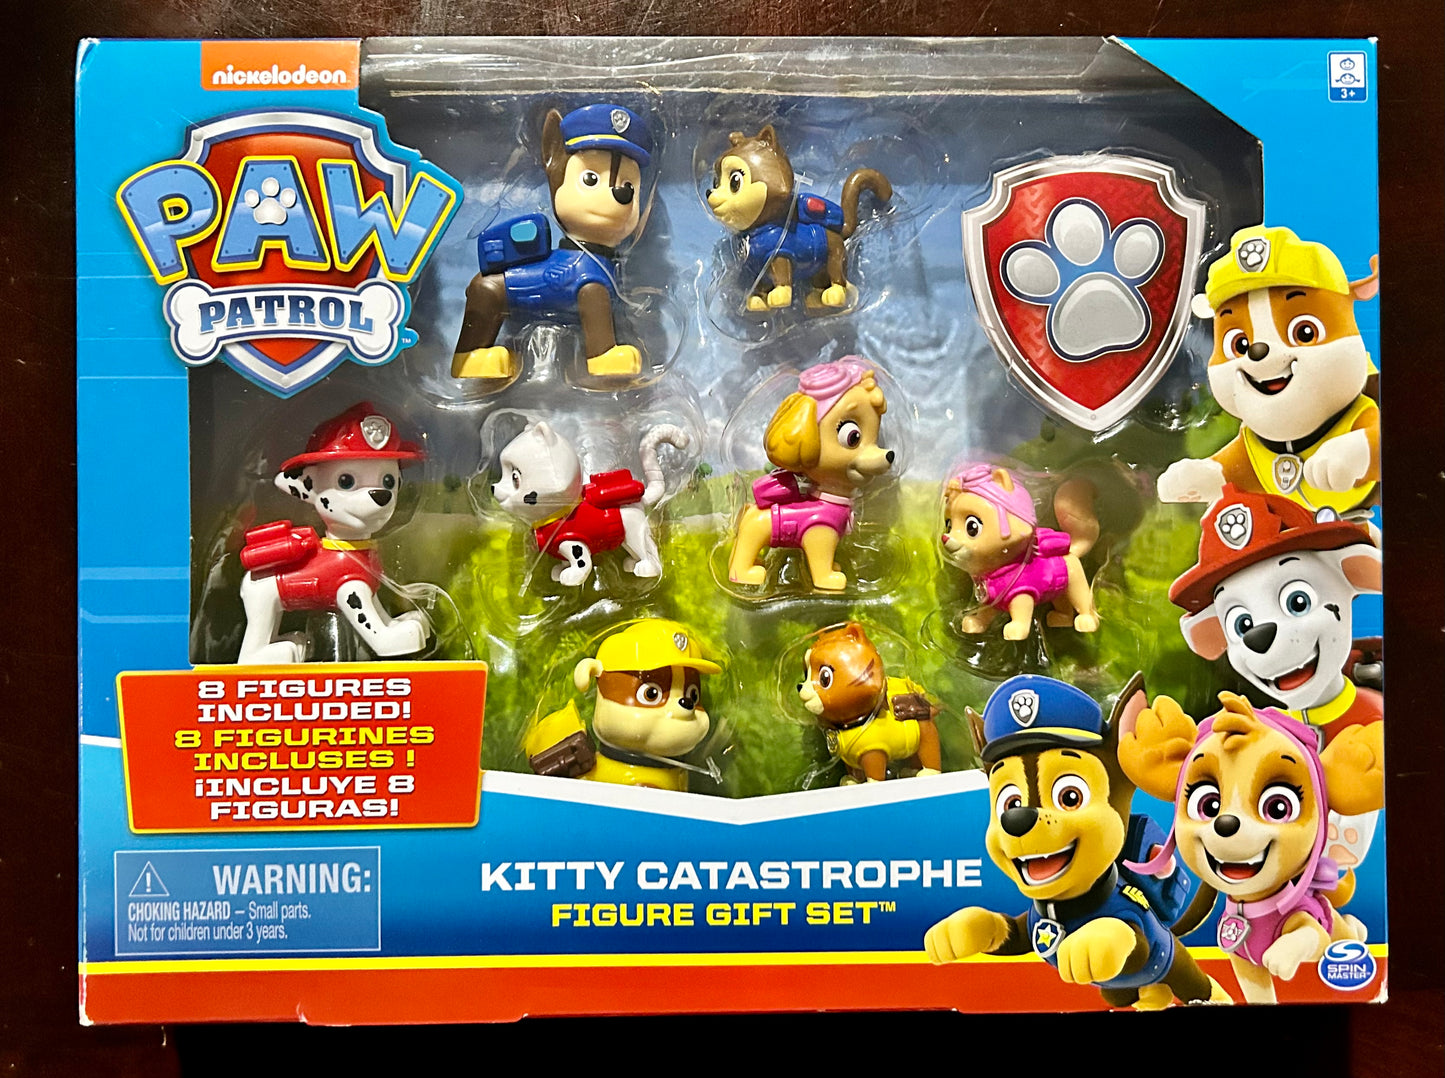 Paw Patrol Kitty Catastrophe 8-Figure Gift Set 31349